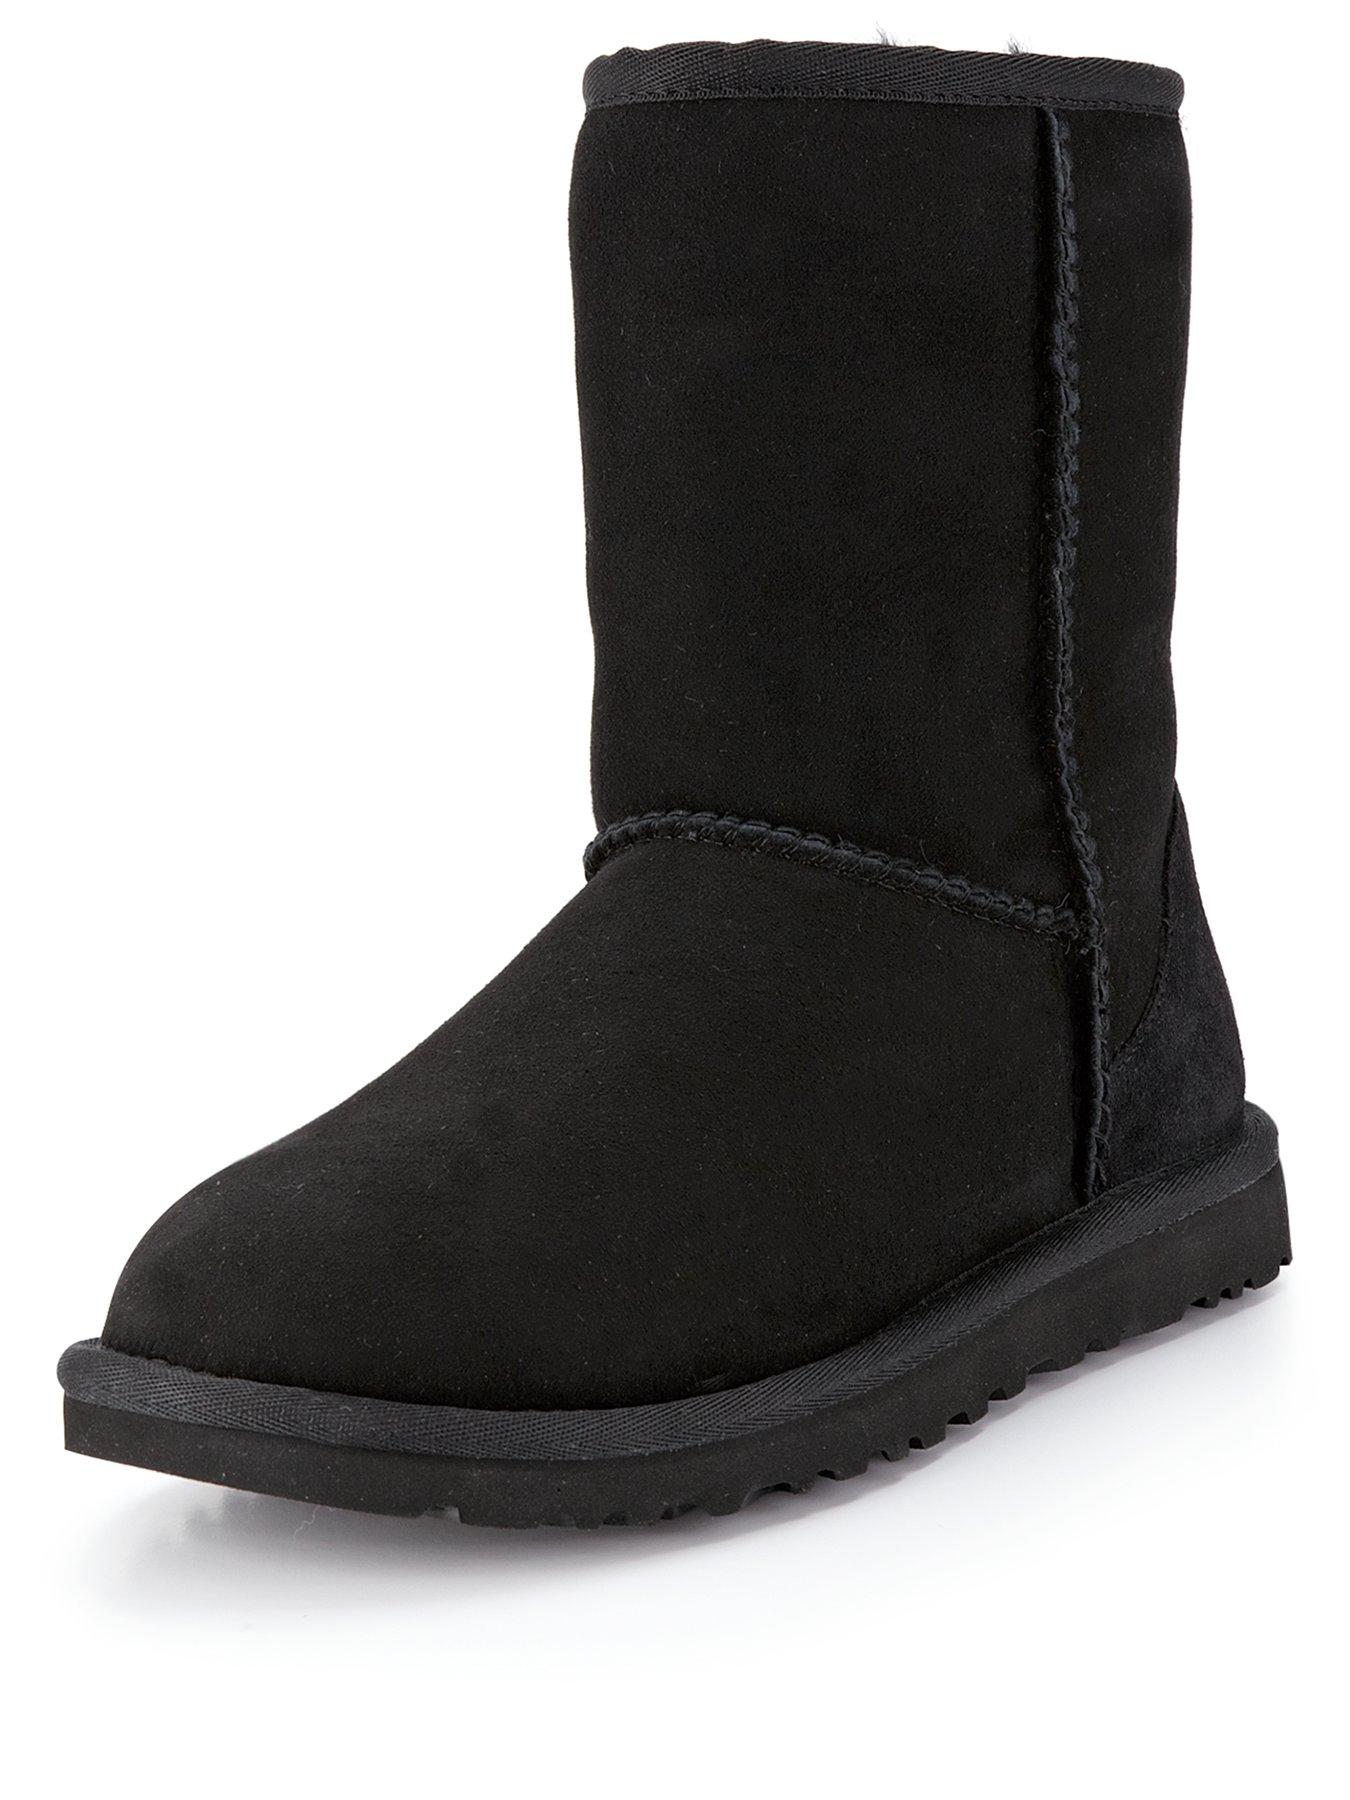 UGG Classic Short II Calf Boots - Black 